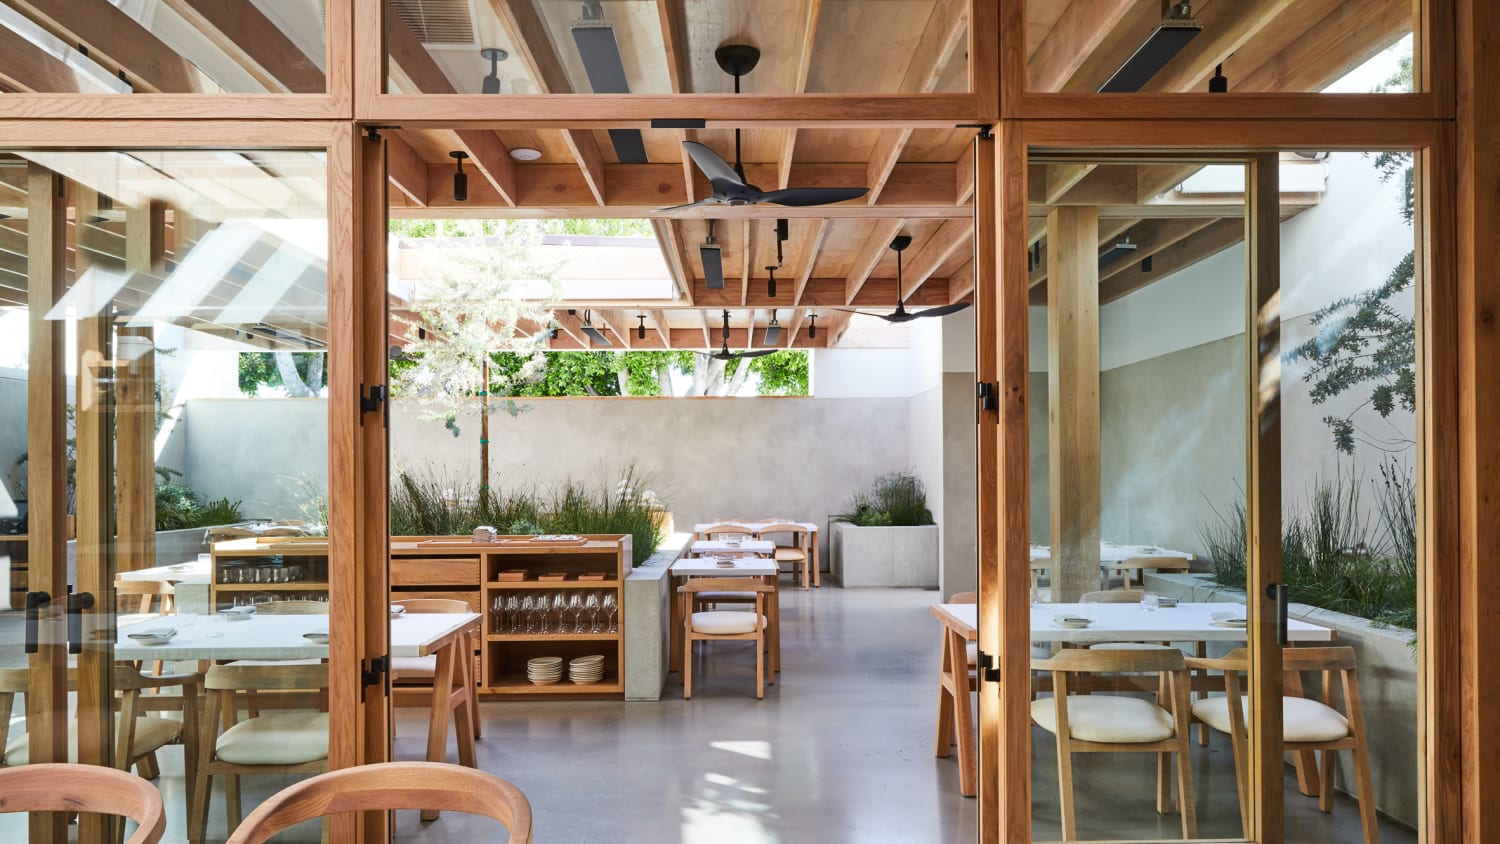 Rustic and homey restaurant Auburn opens on LA's Melrose Avenue